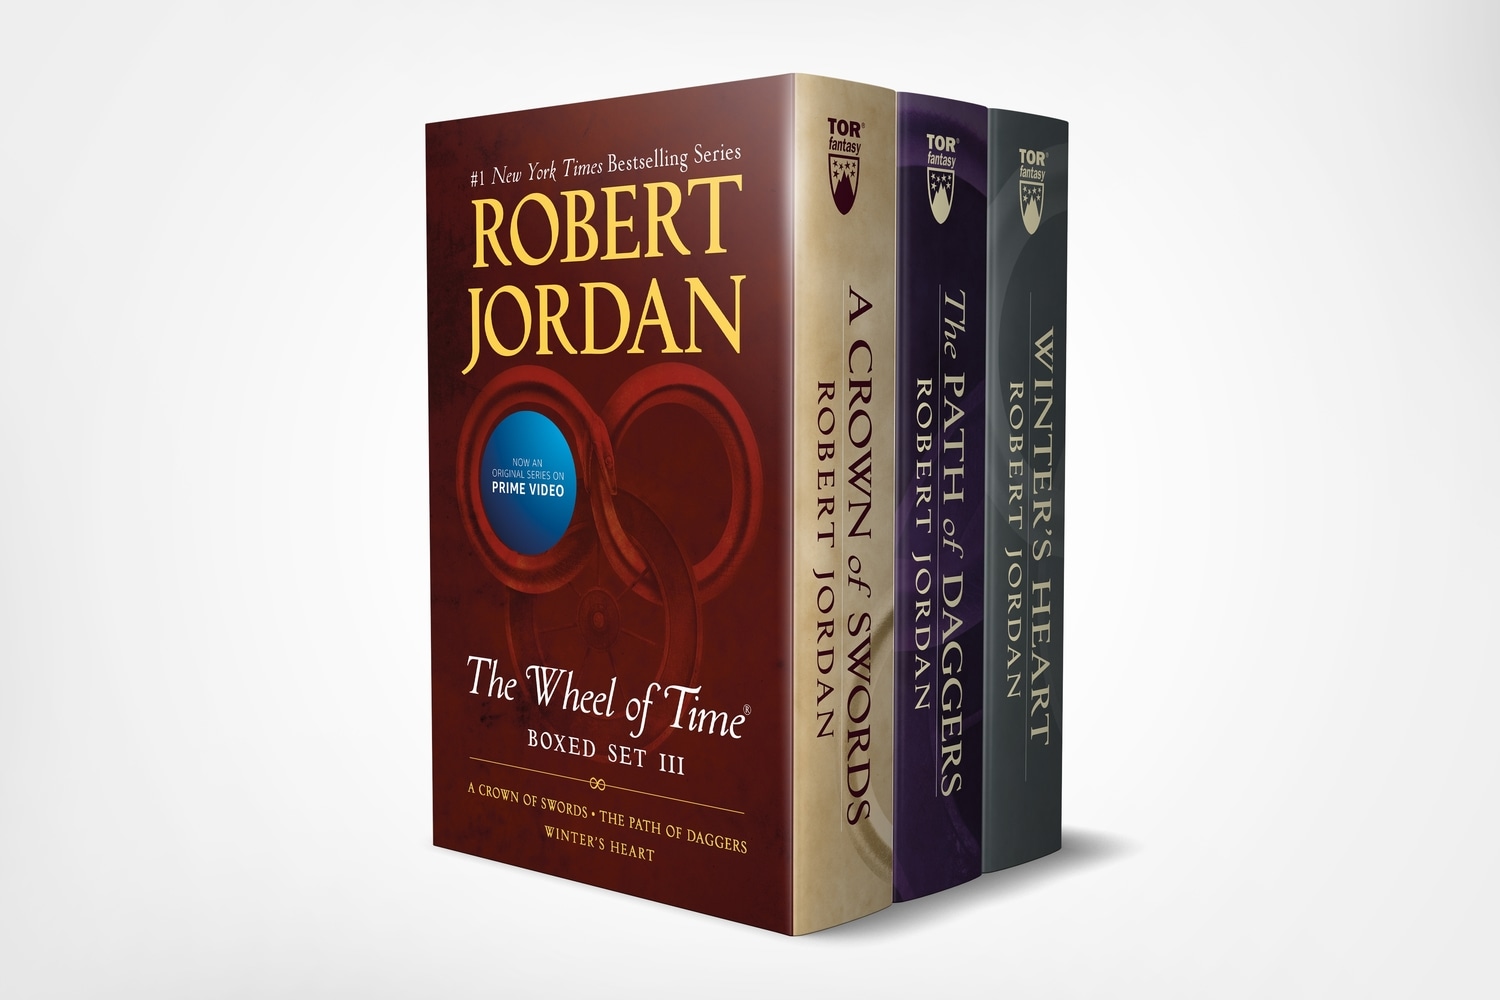 Book “Wheel of Time Premium Boxed Set III” by Robert Jordan — February 25, 2020